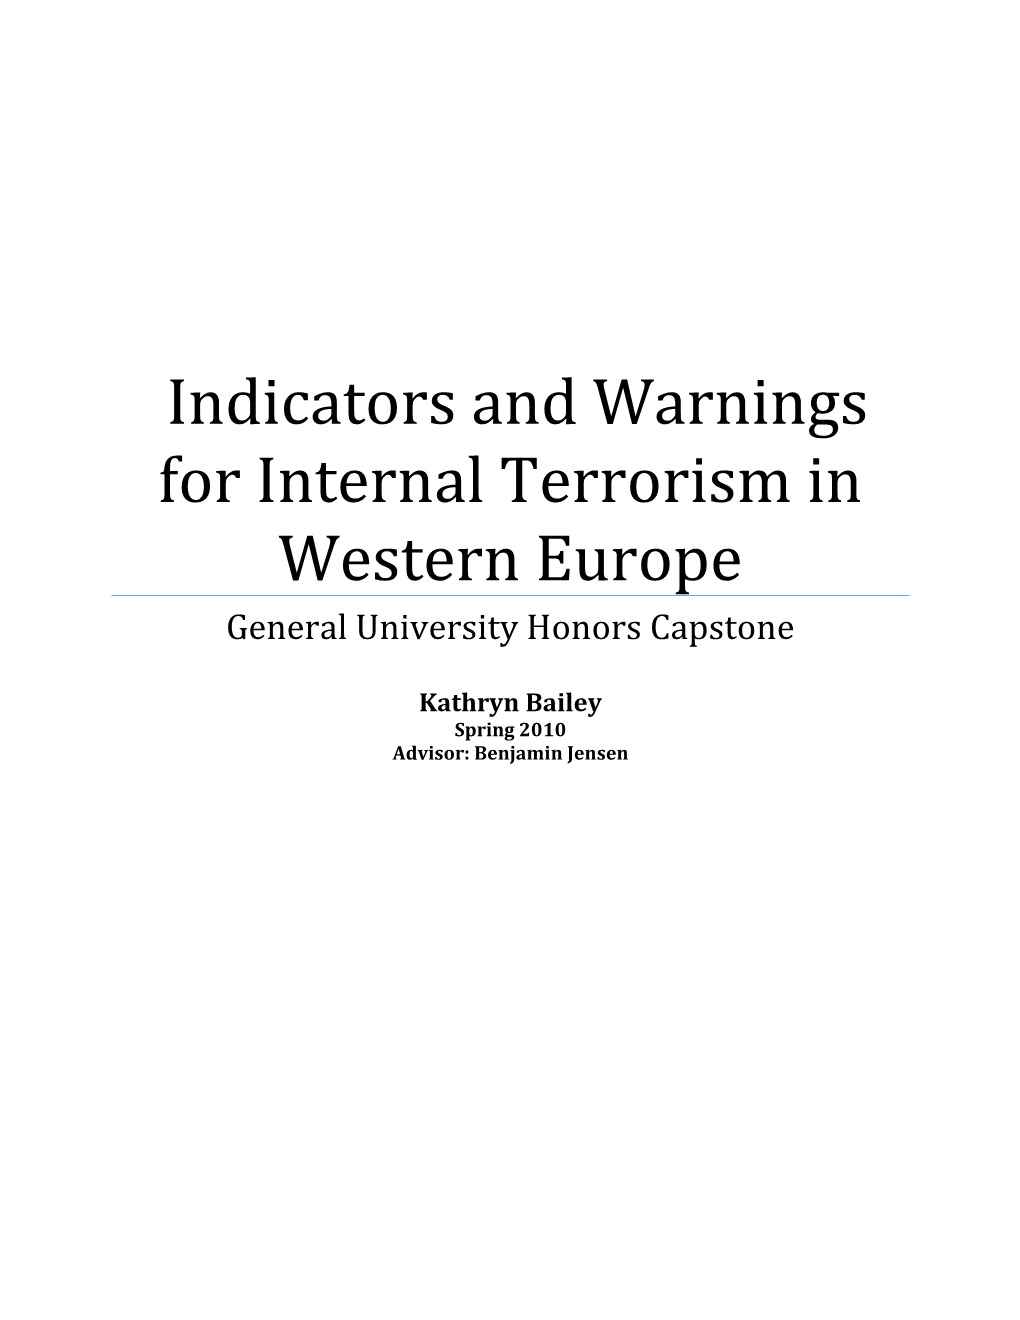 Indicators and Warnings for Internal Terrorism in Western Europe General University Honors Capstone